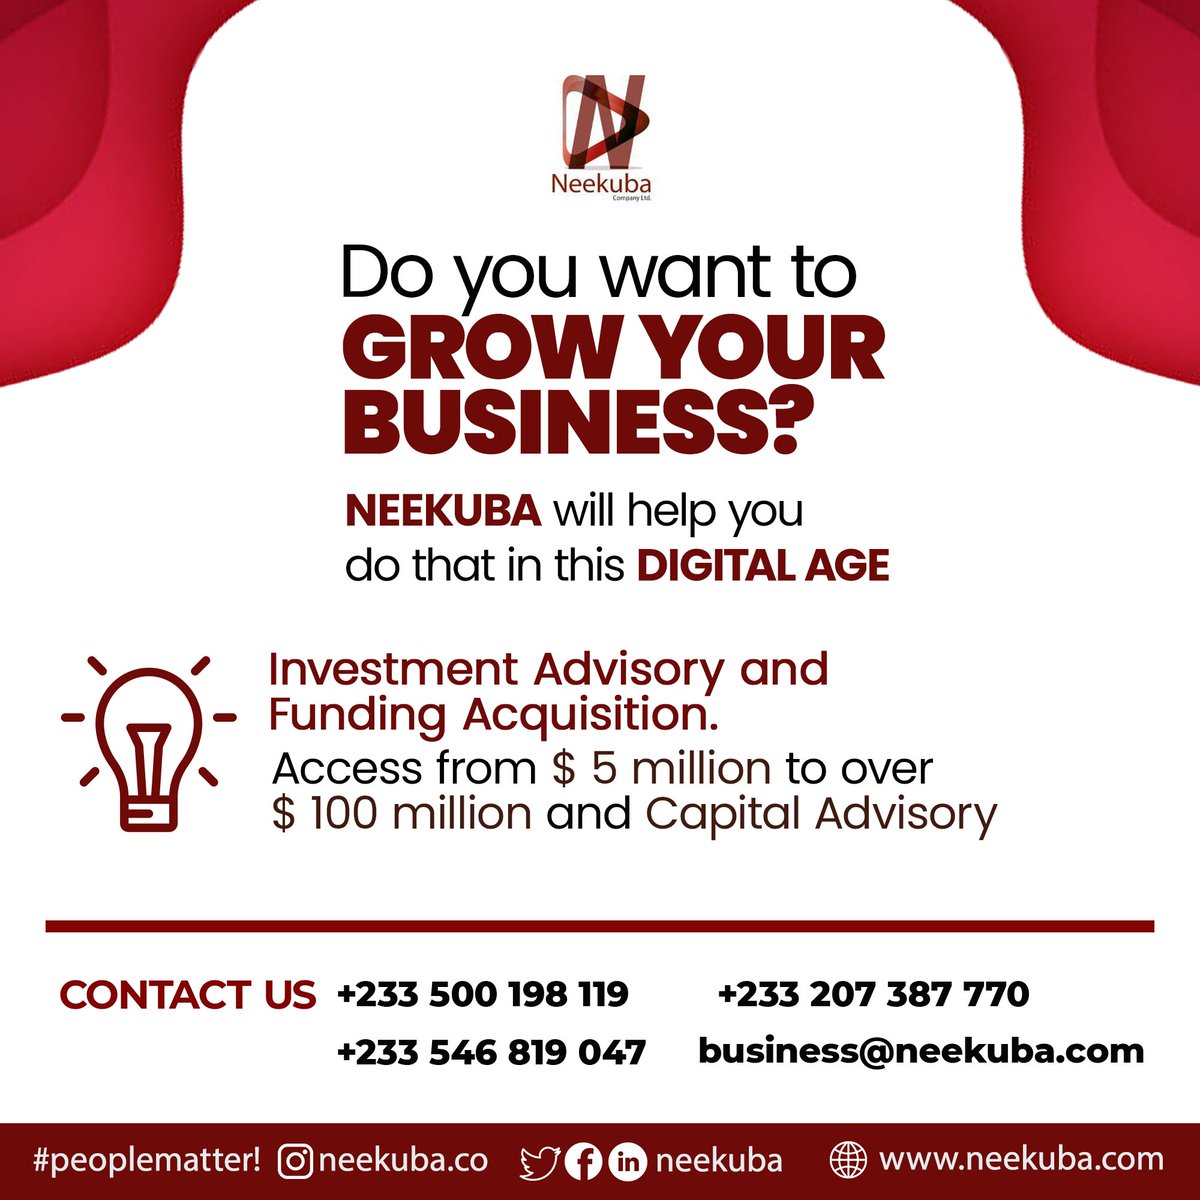 Grow your business profitably in a digital age? 

Contact us: business@neekuba.com

#neekuba #peoplematter #business #digitalage #digital #profitable #investment #advisory #funding #businessdevelopment #managementconsultancy #management #consultancy